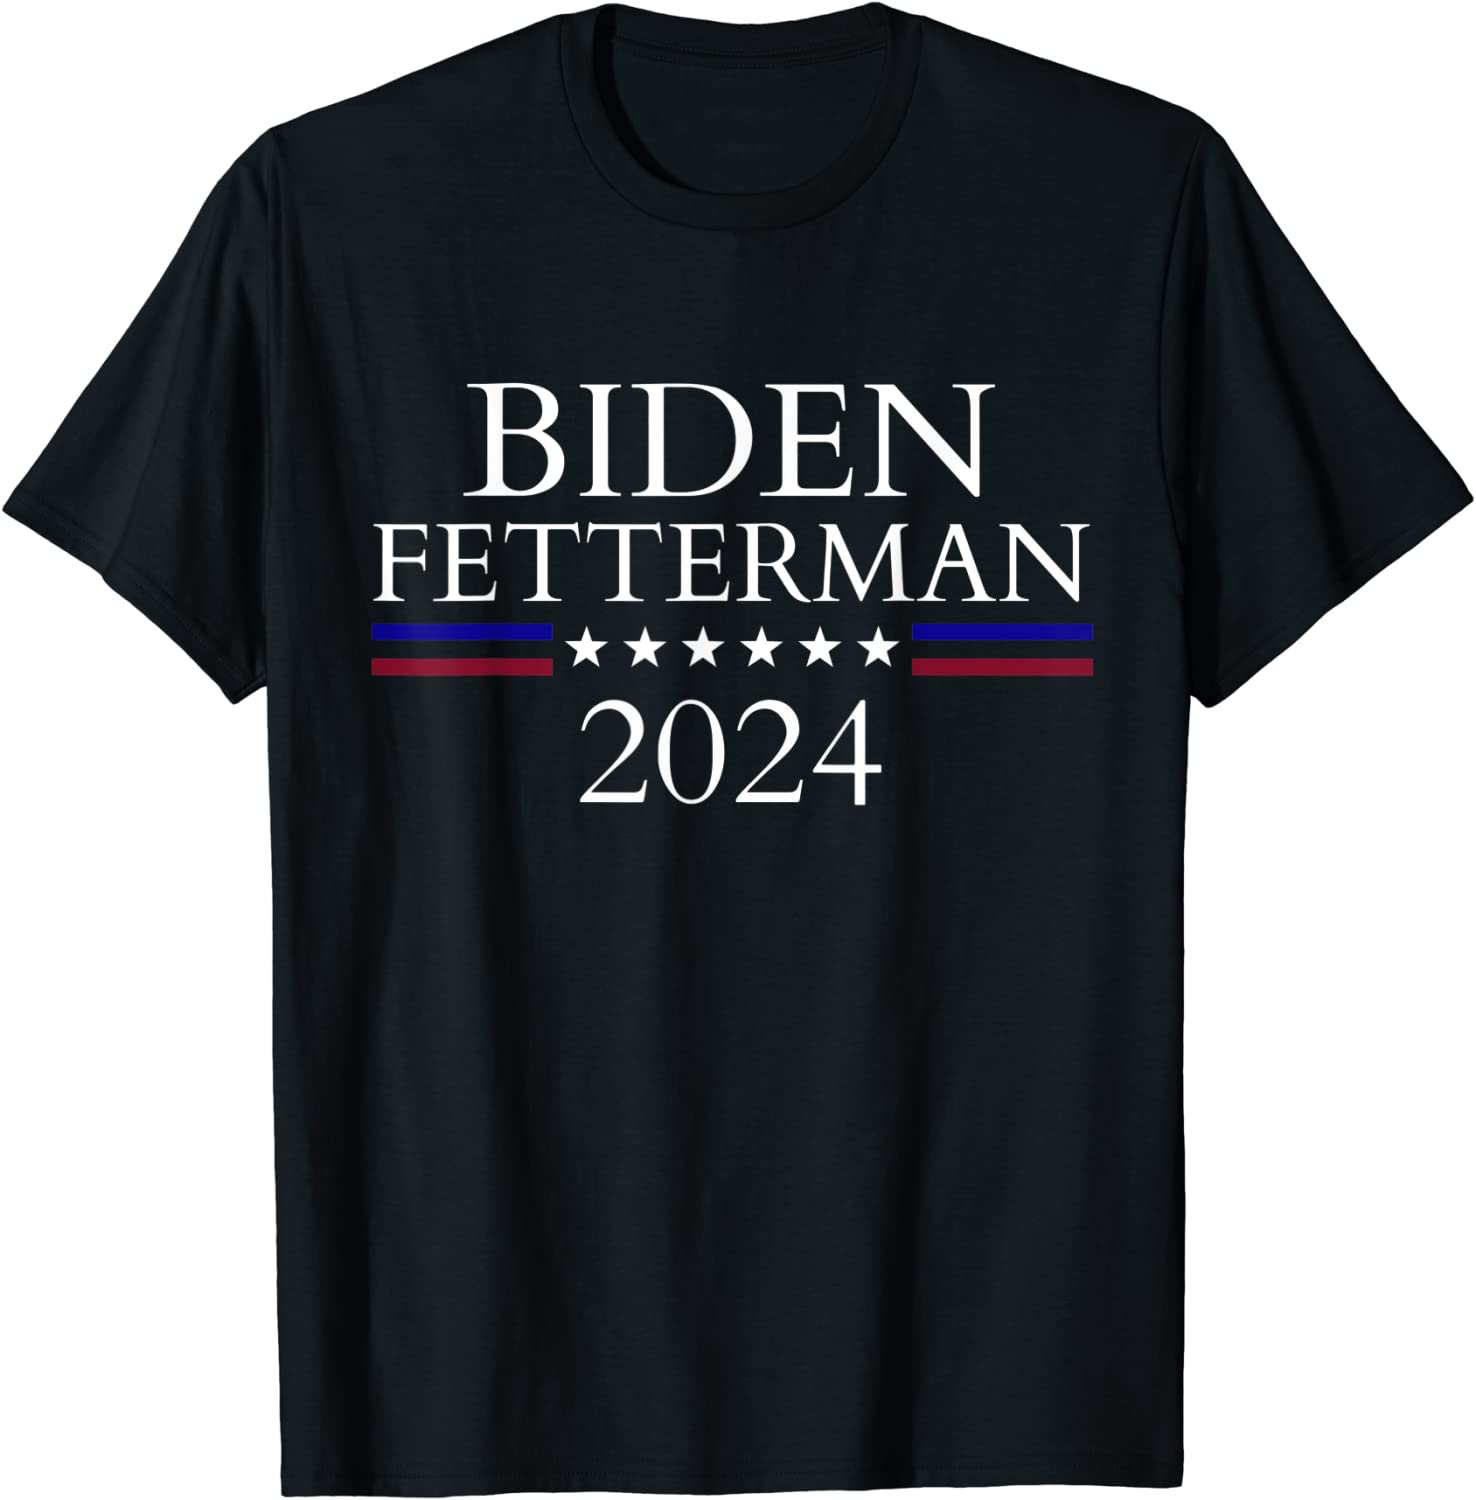 Biden Fetterman 2024 TShirt